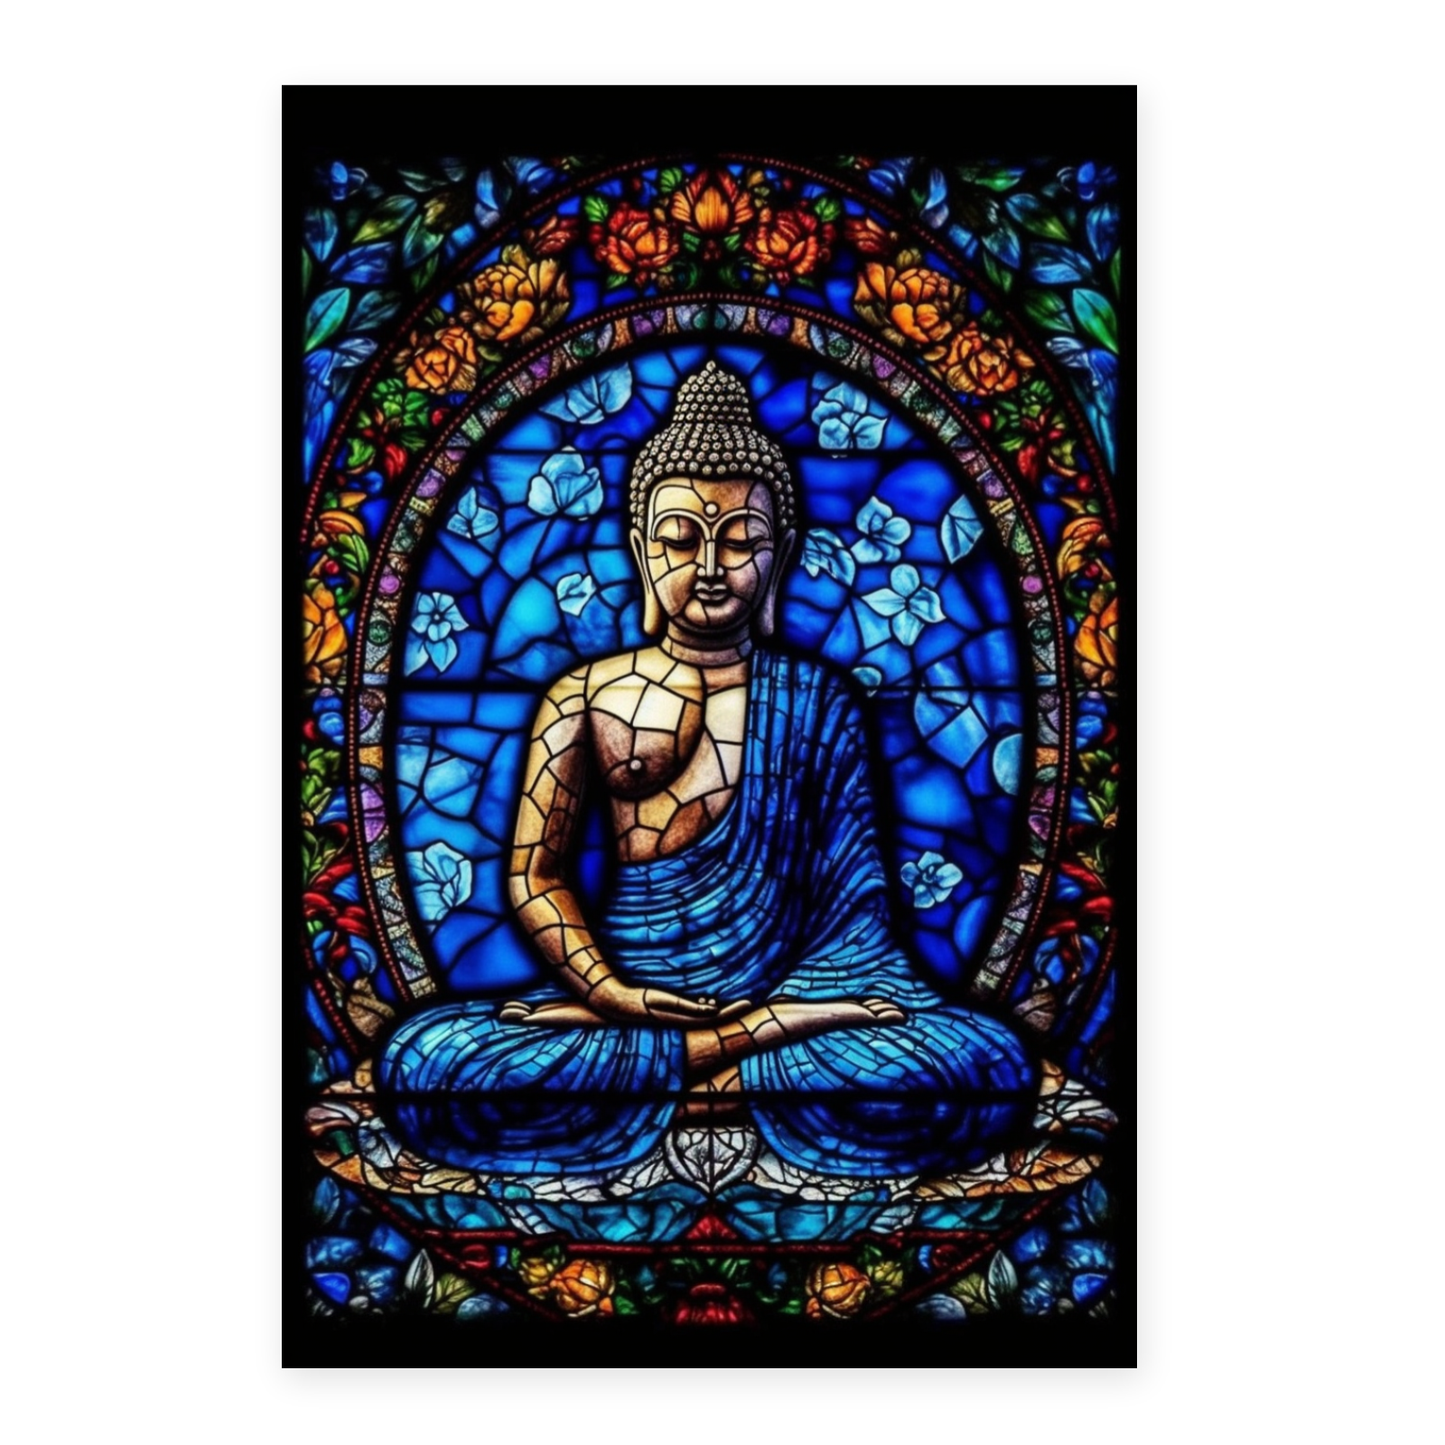 Lámina de Buda en Arte de Vidrieras Colorido